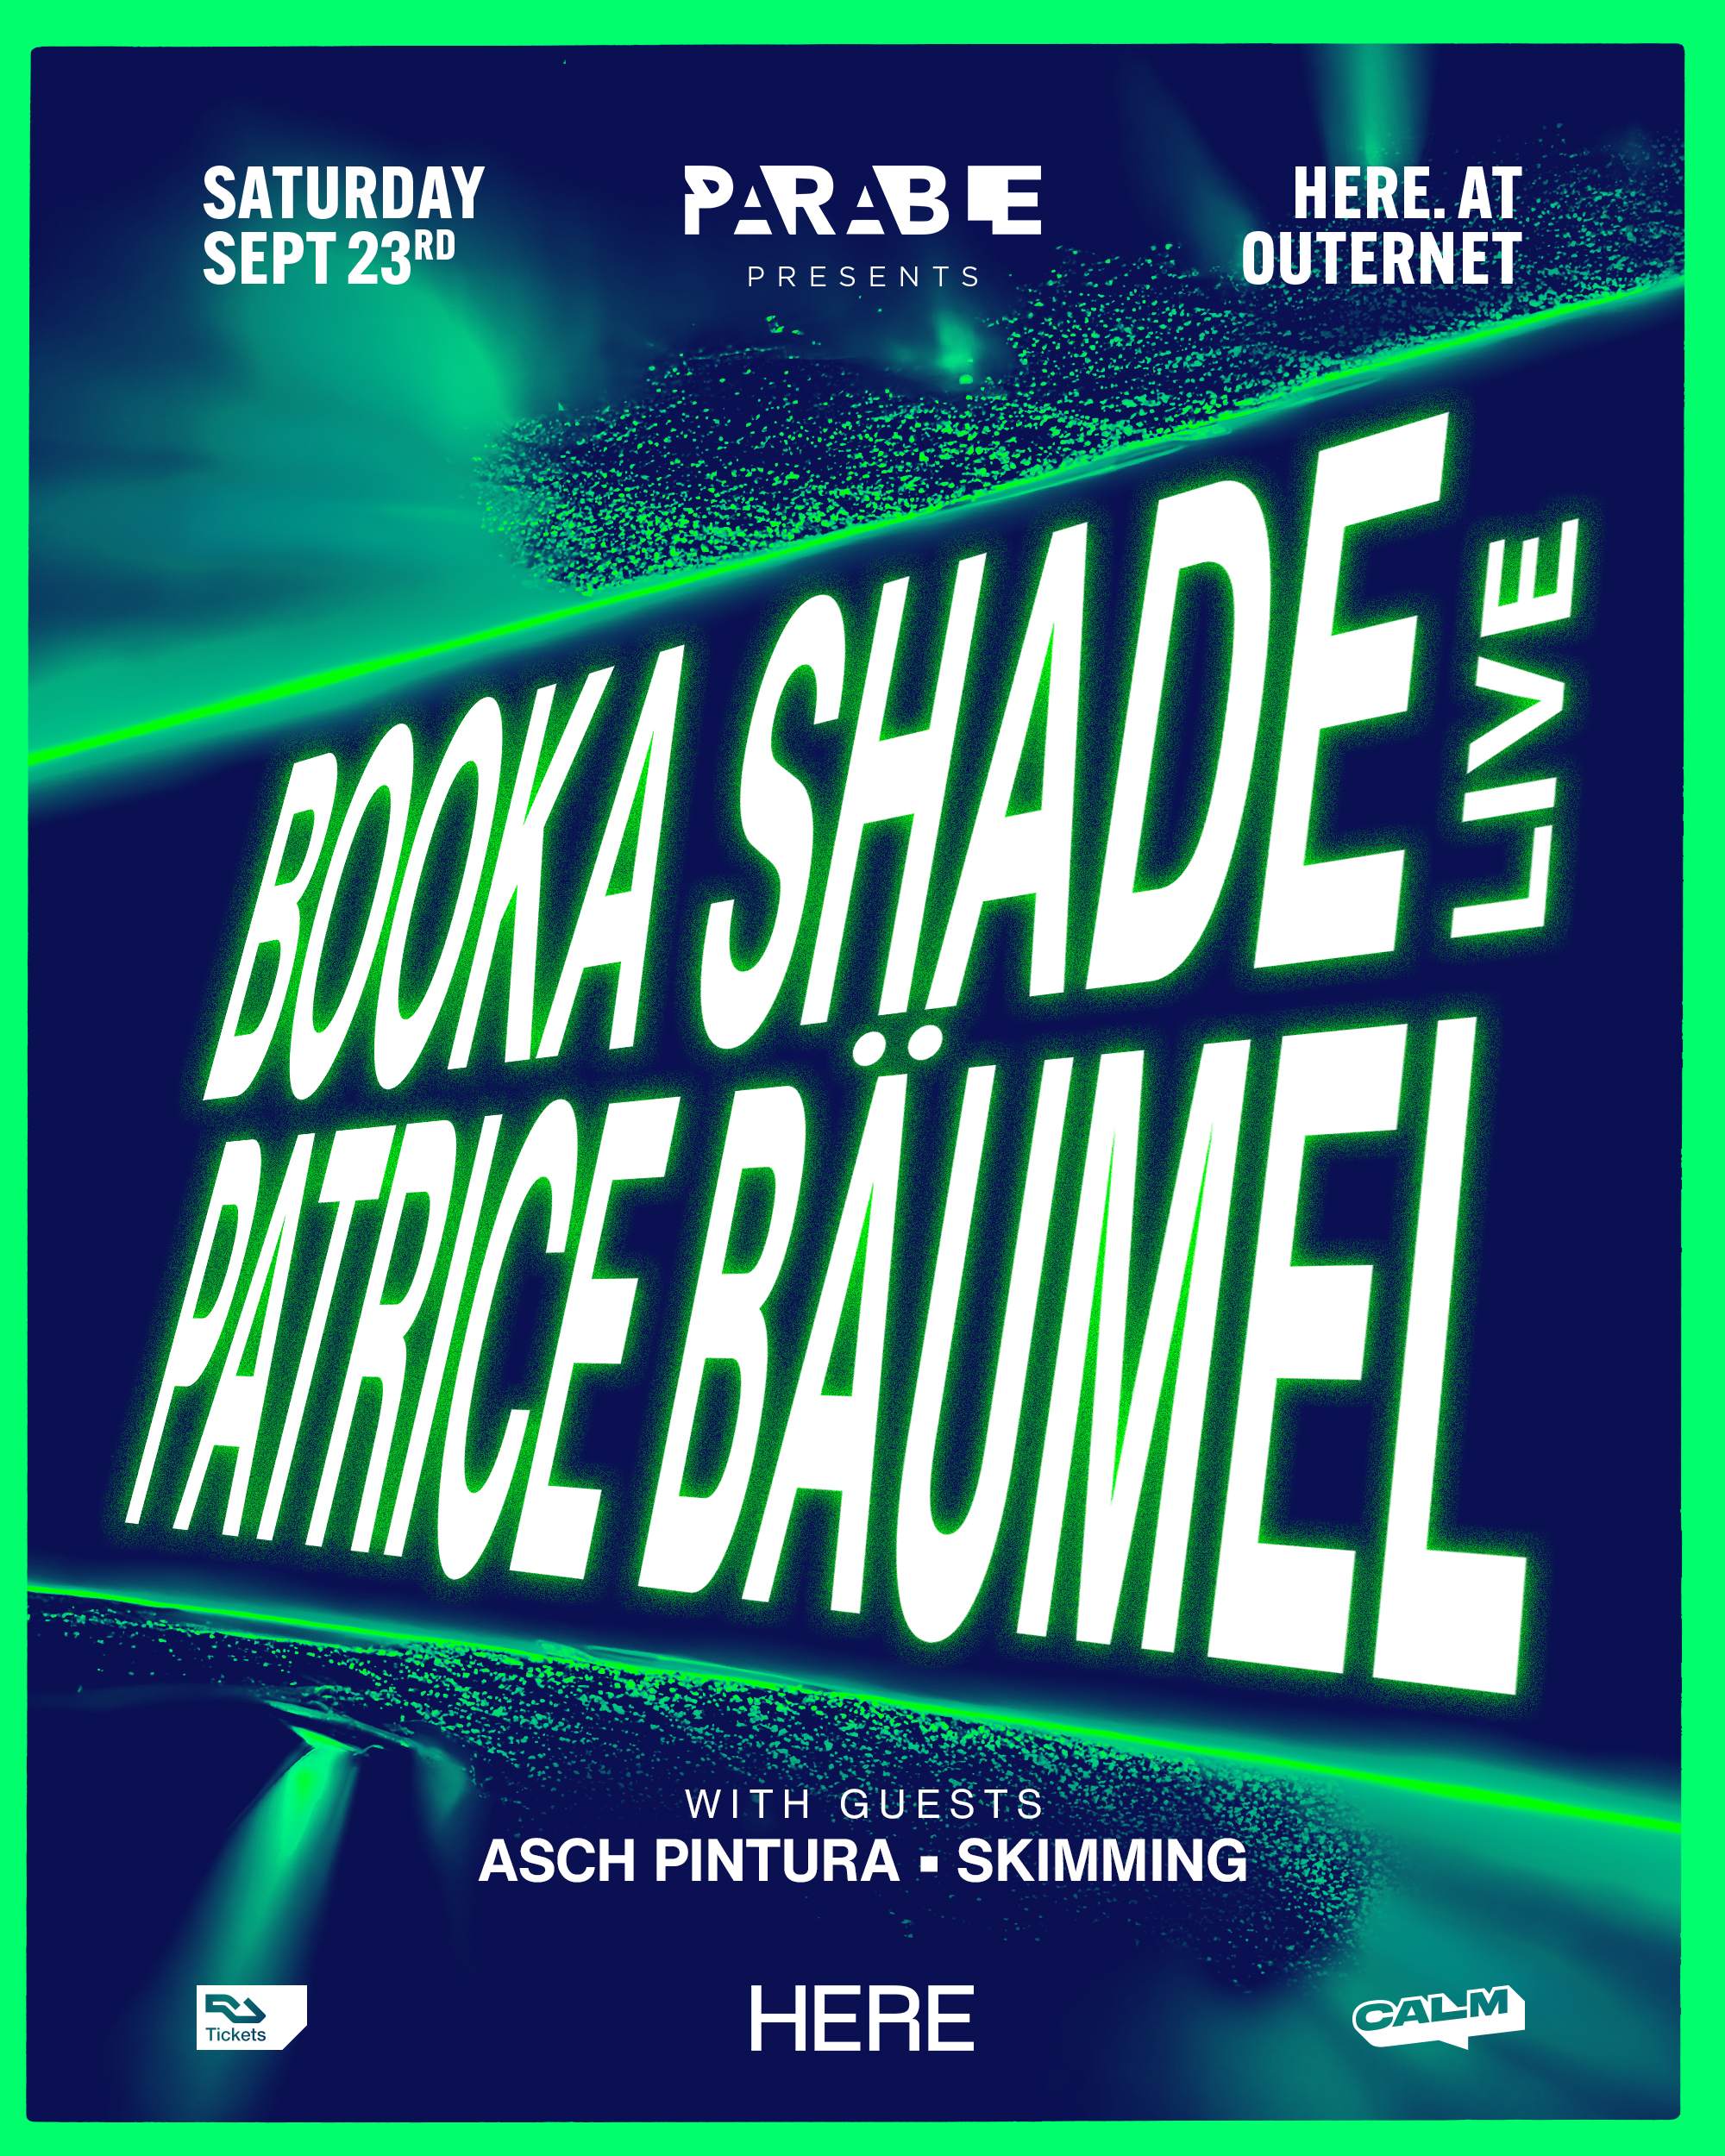 Parable presents: Booka Shade live, Patrice Baumel, Asch Pintura - Página frontal